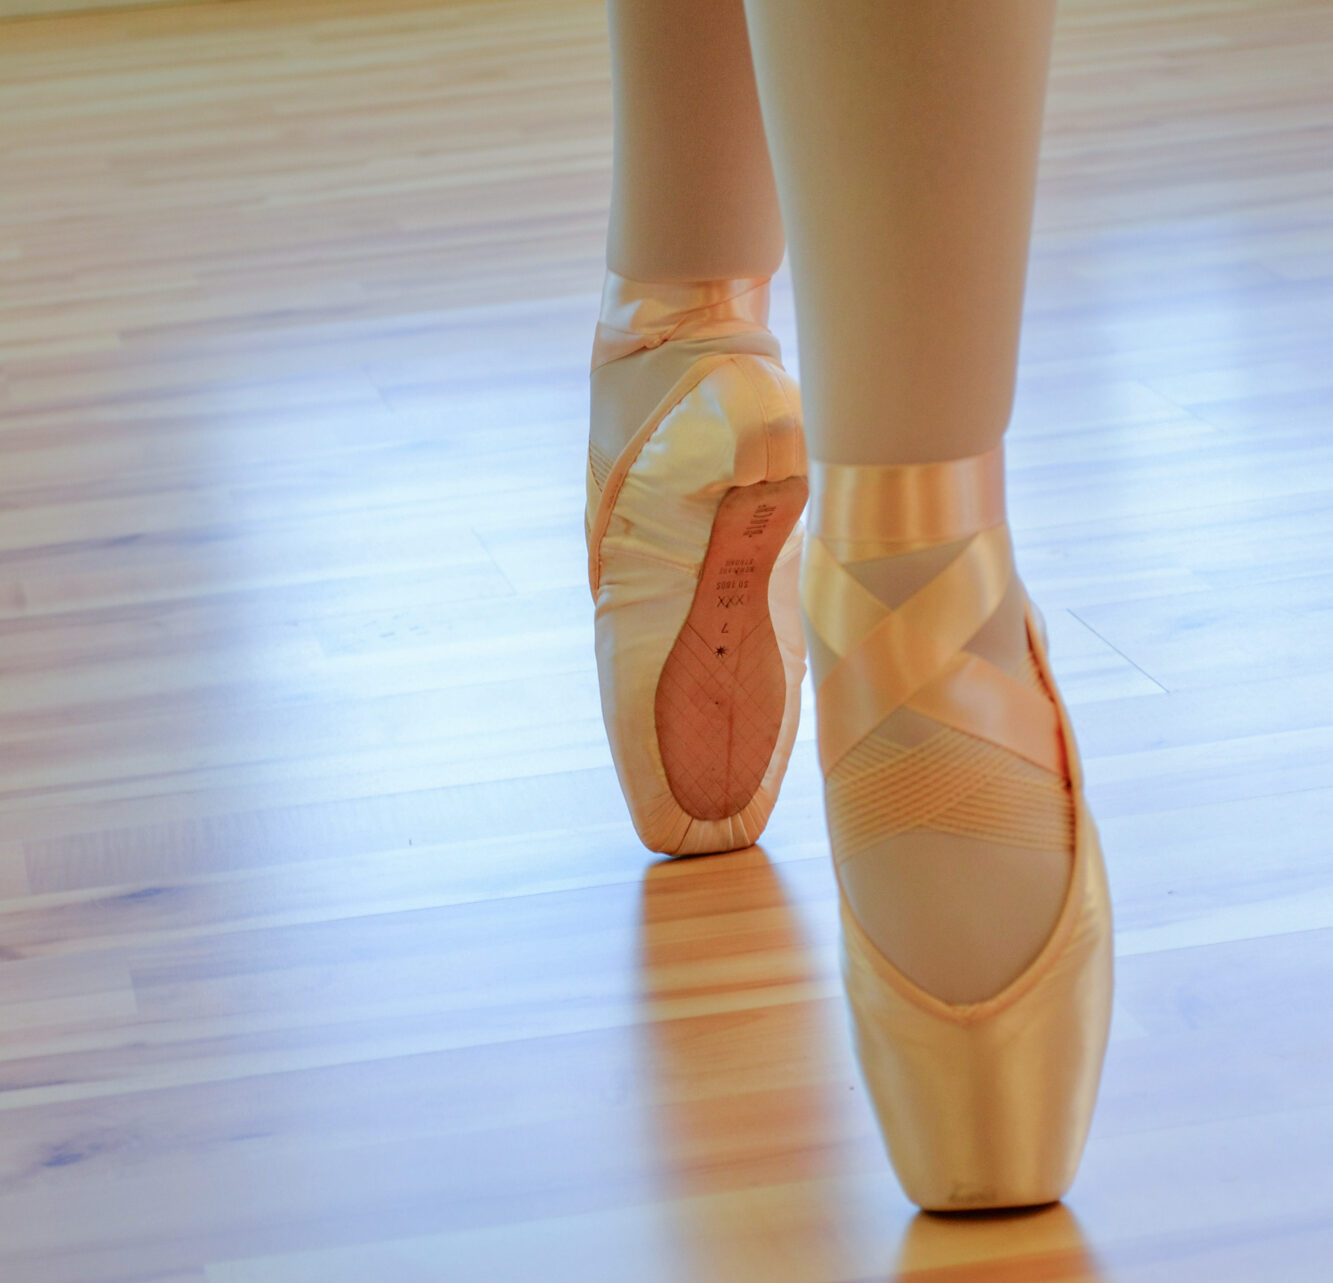 A photo of a ballet dancer's toes en pointe.